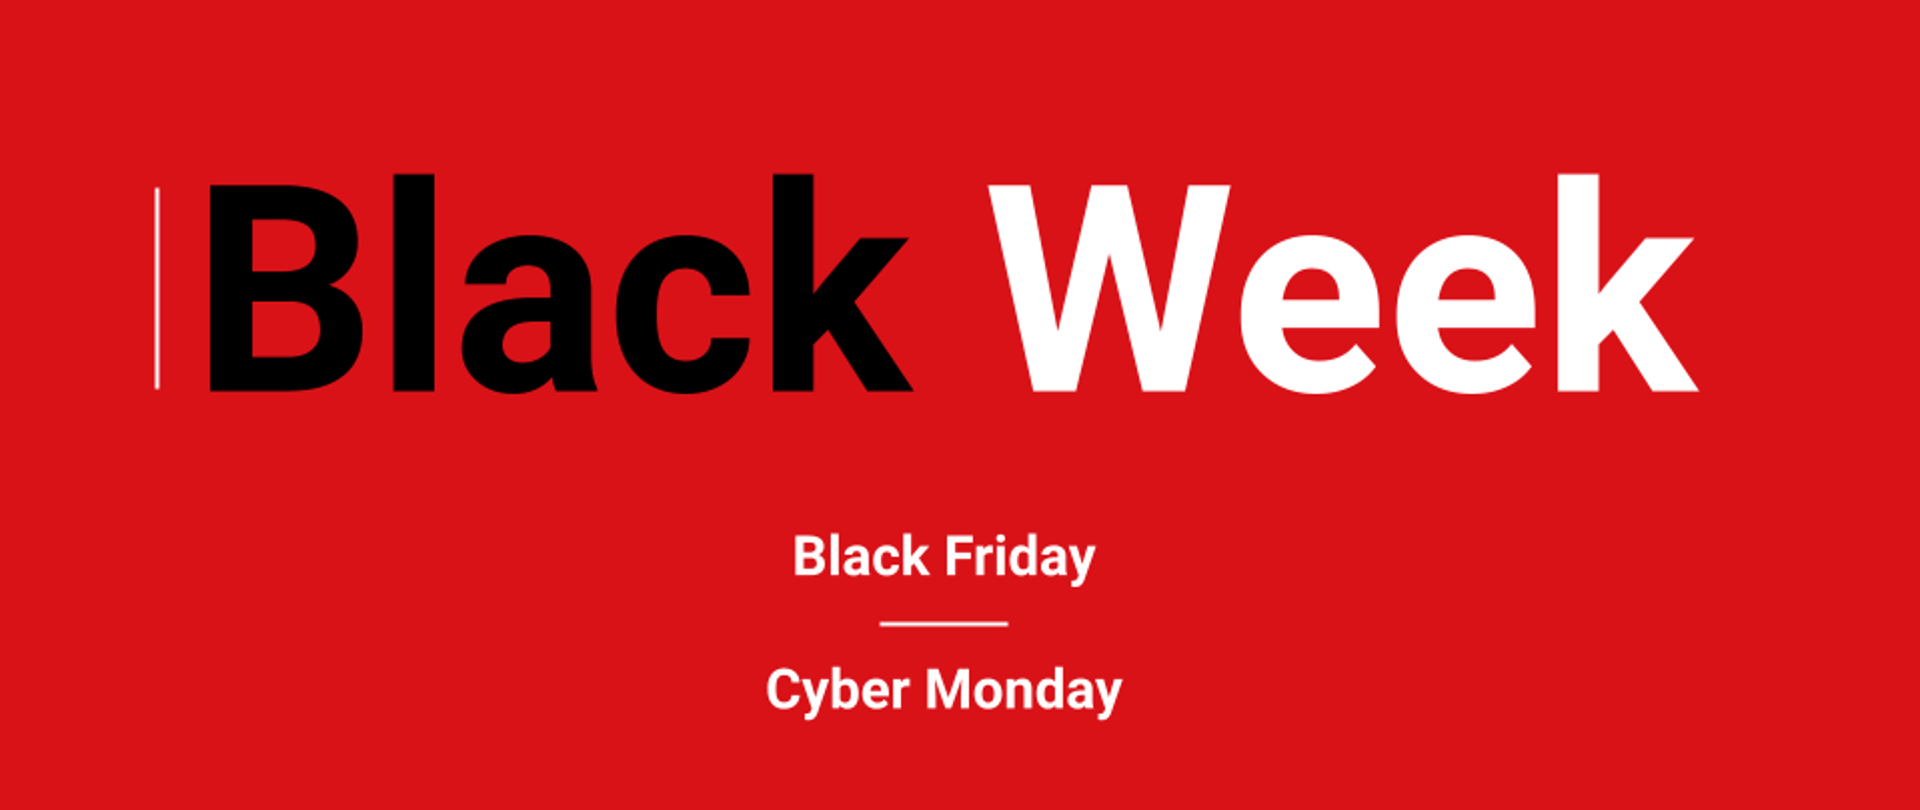 Napisy na czerwonym tle Black Week, Black Friday i Cyber Monday